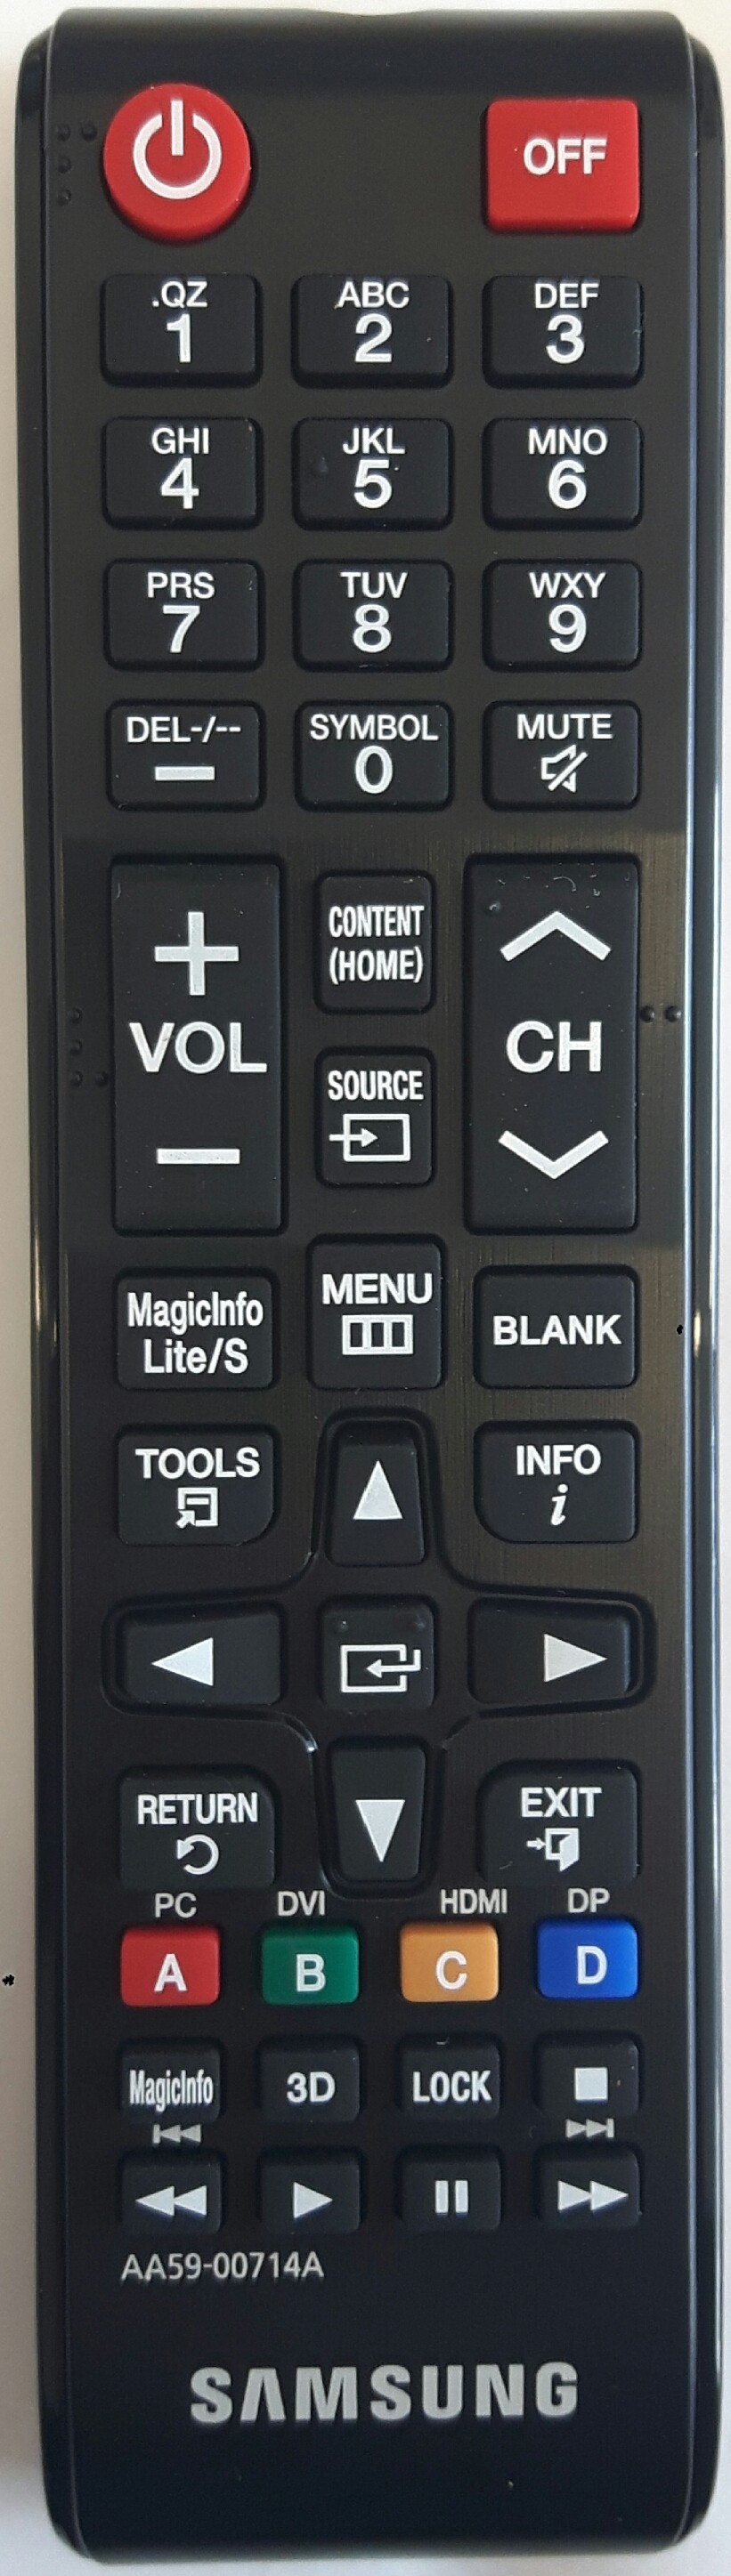 SAMSUNG UD46C Remote Control Original